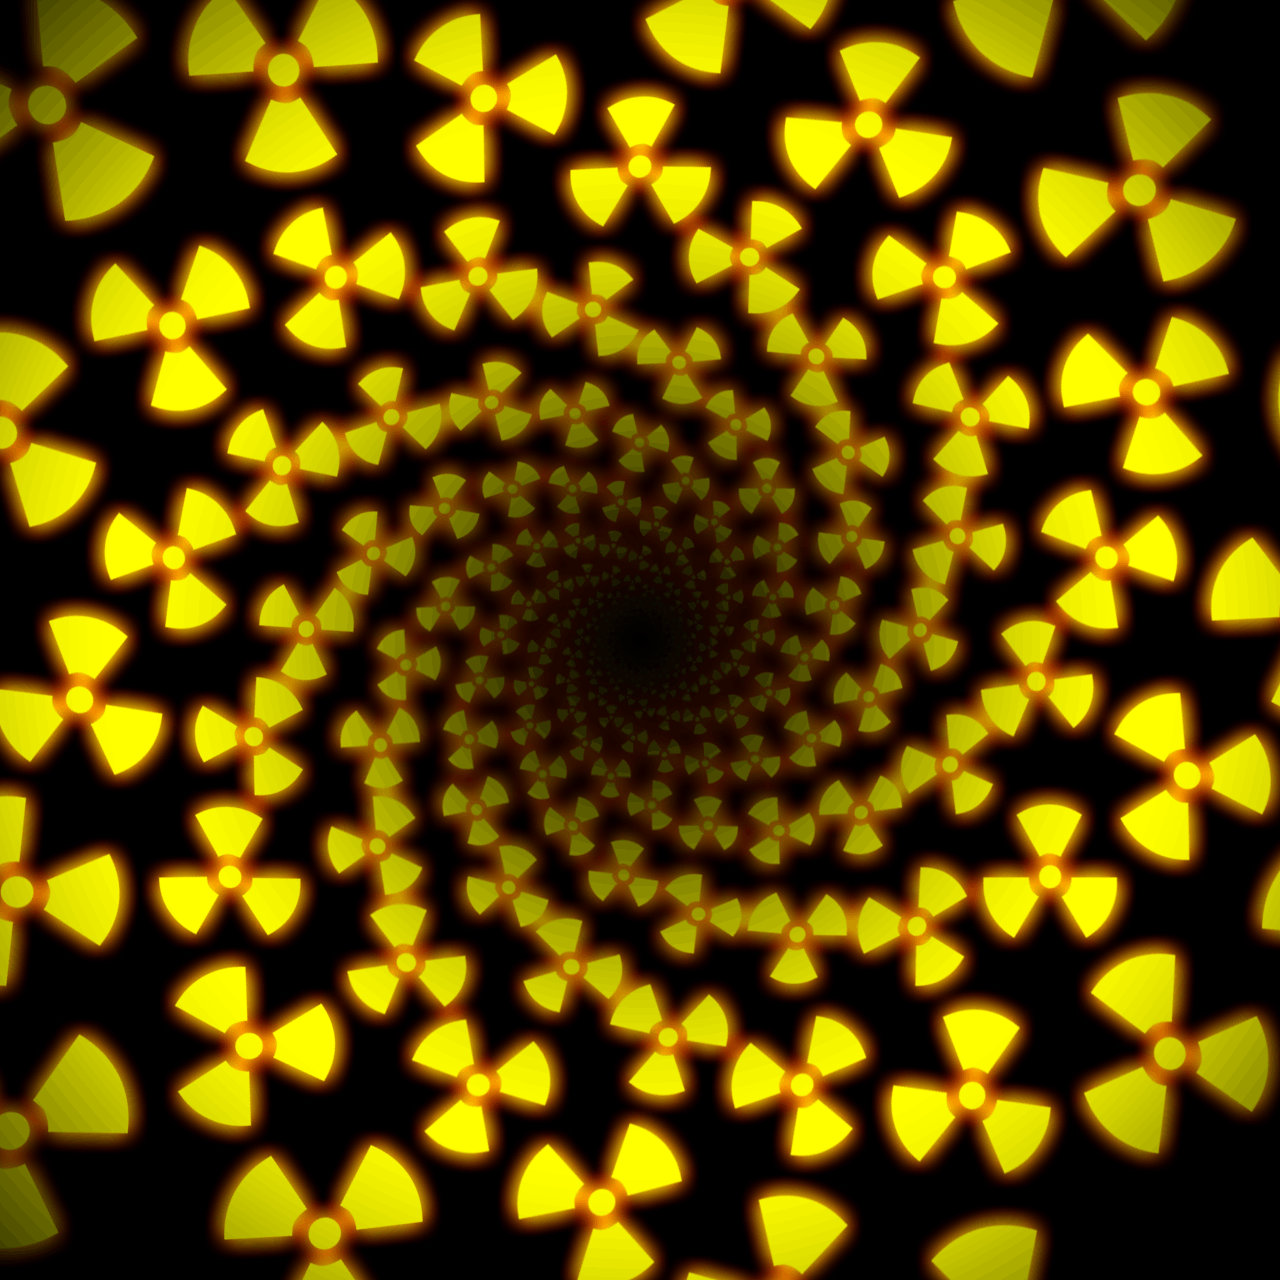 spiral anim 79 by lordsqueak optical illusions art medium